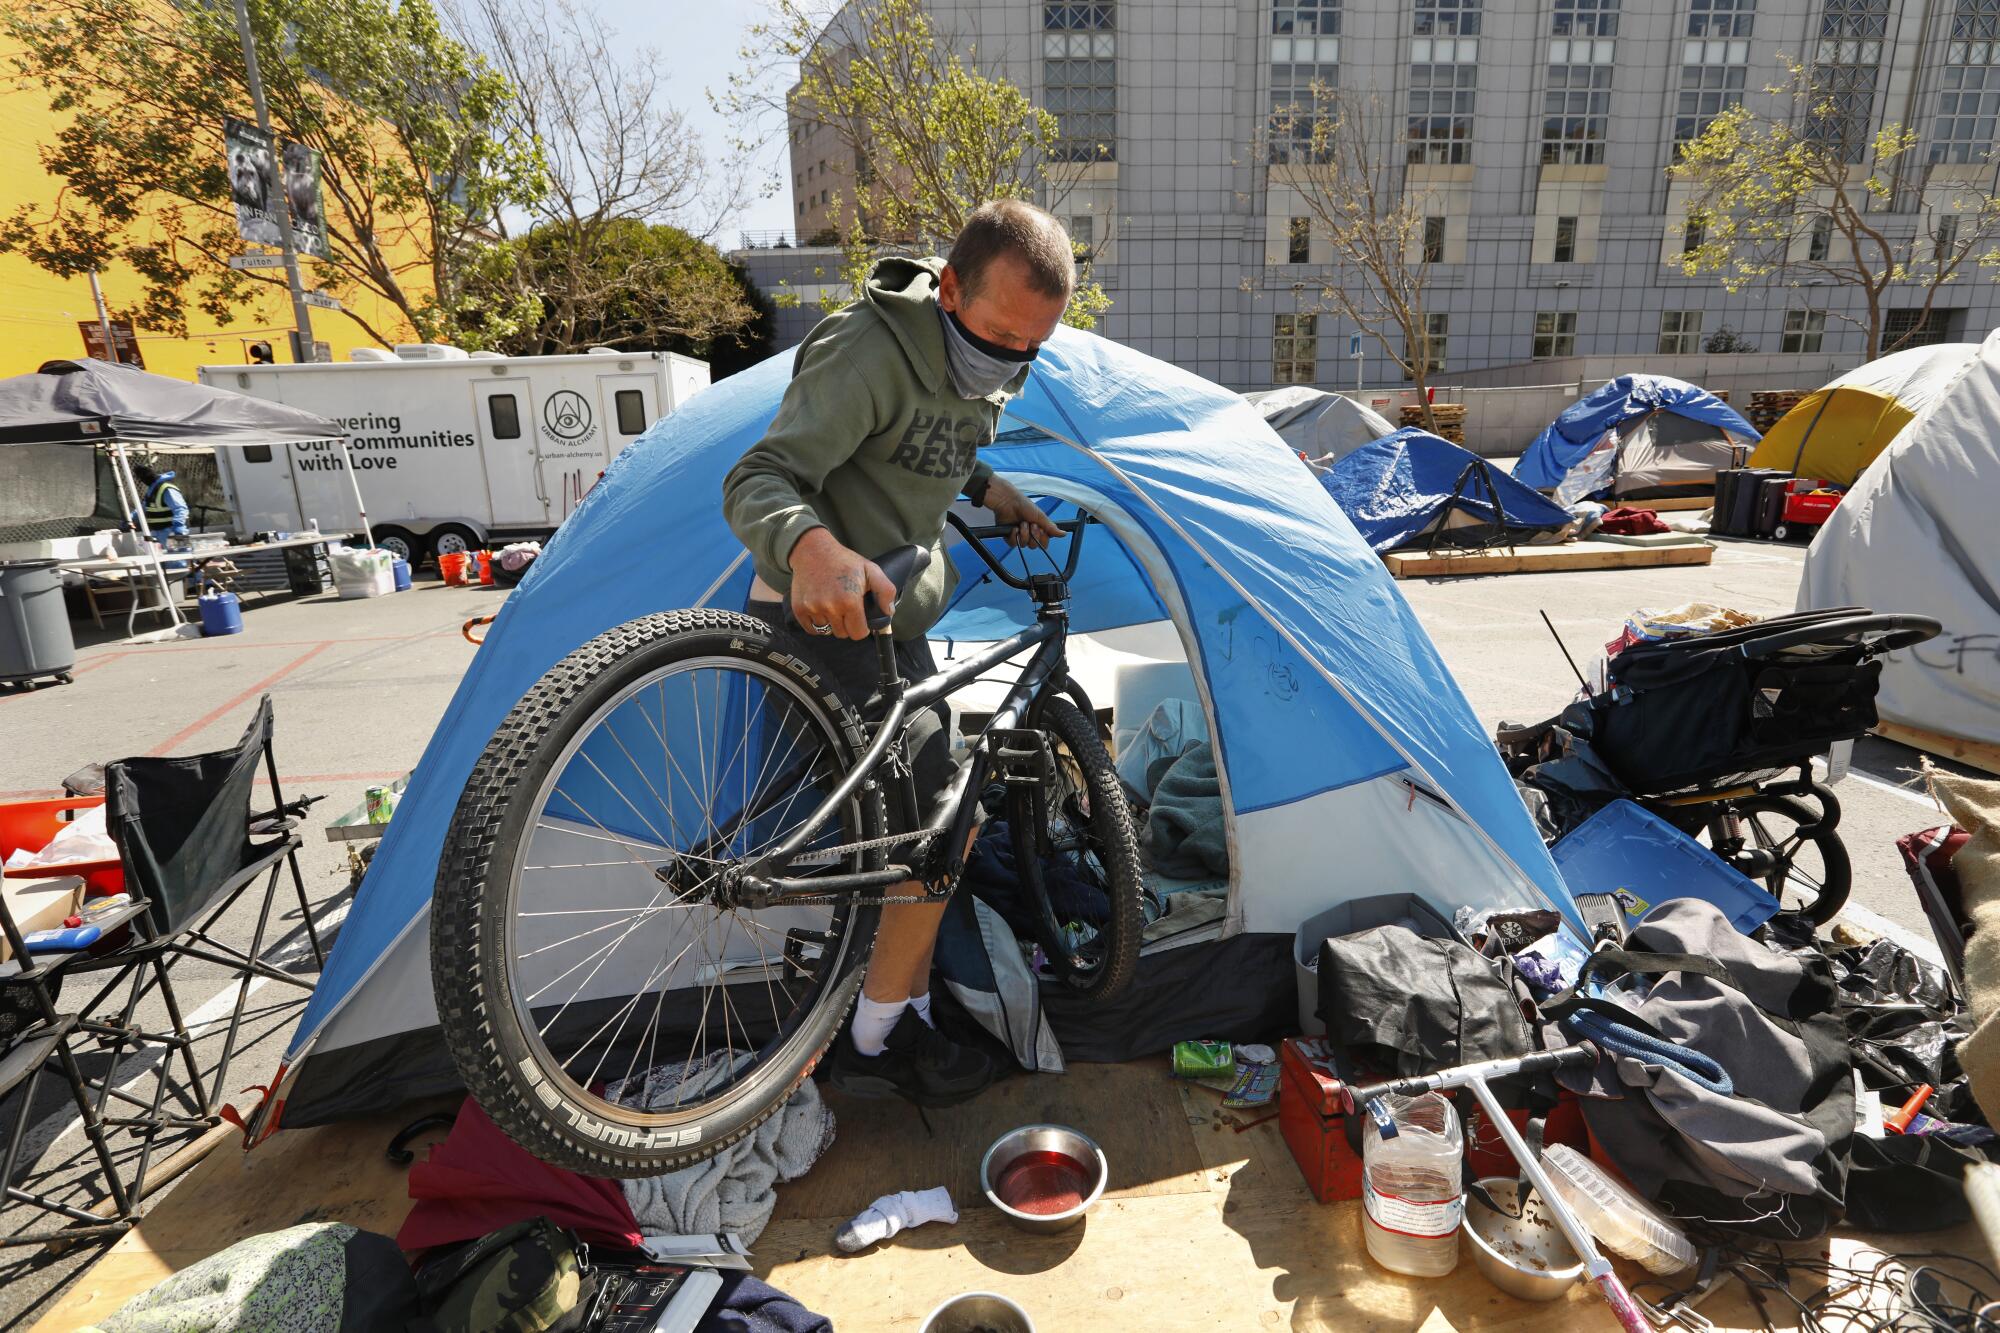 A man carries a bike outside a tent